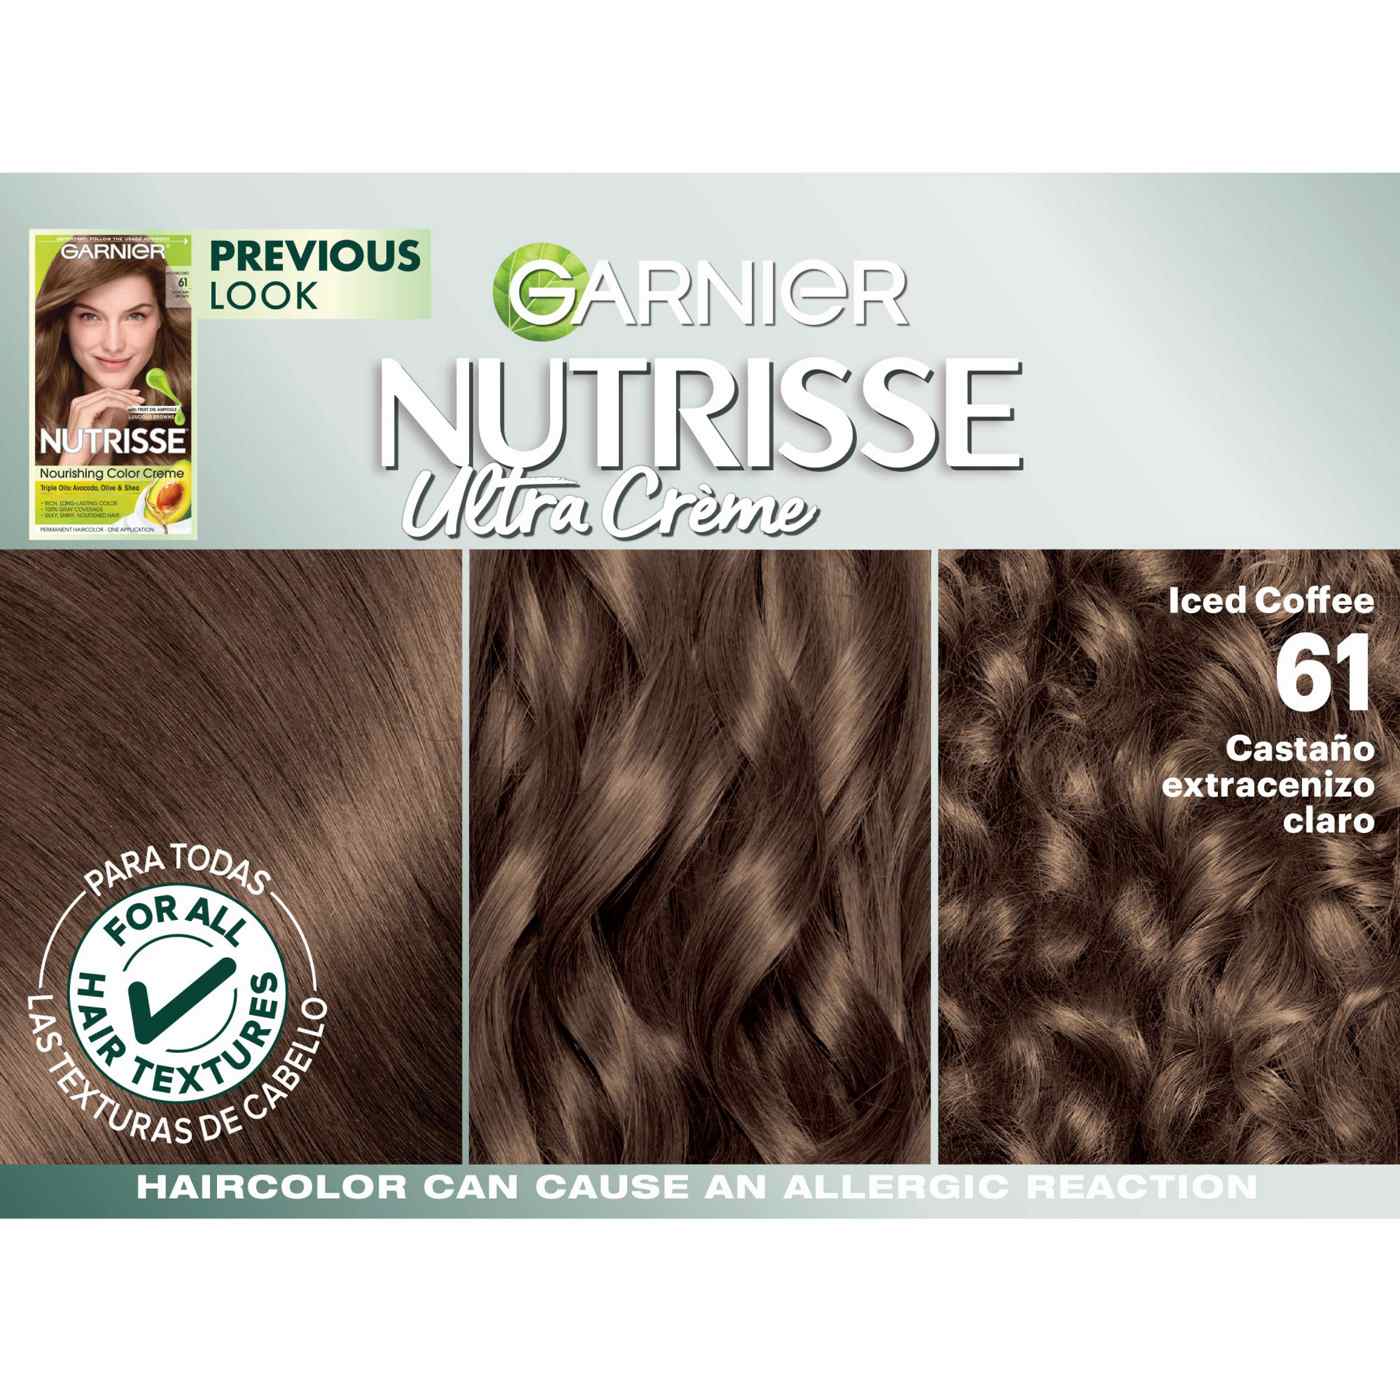 Garnier Nutrisse Nourishing Hair Color Creme - 61 Light Ash Brown (Iced Coffee); image 2 of 7